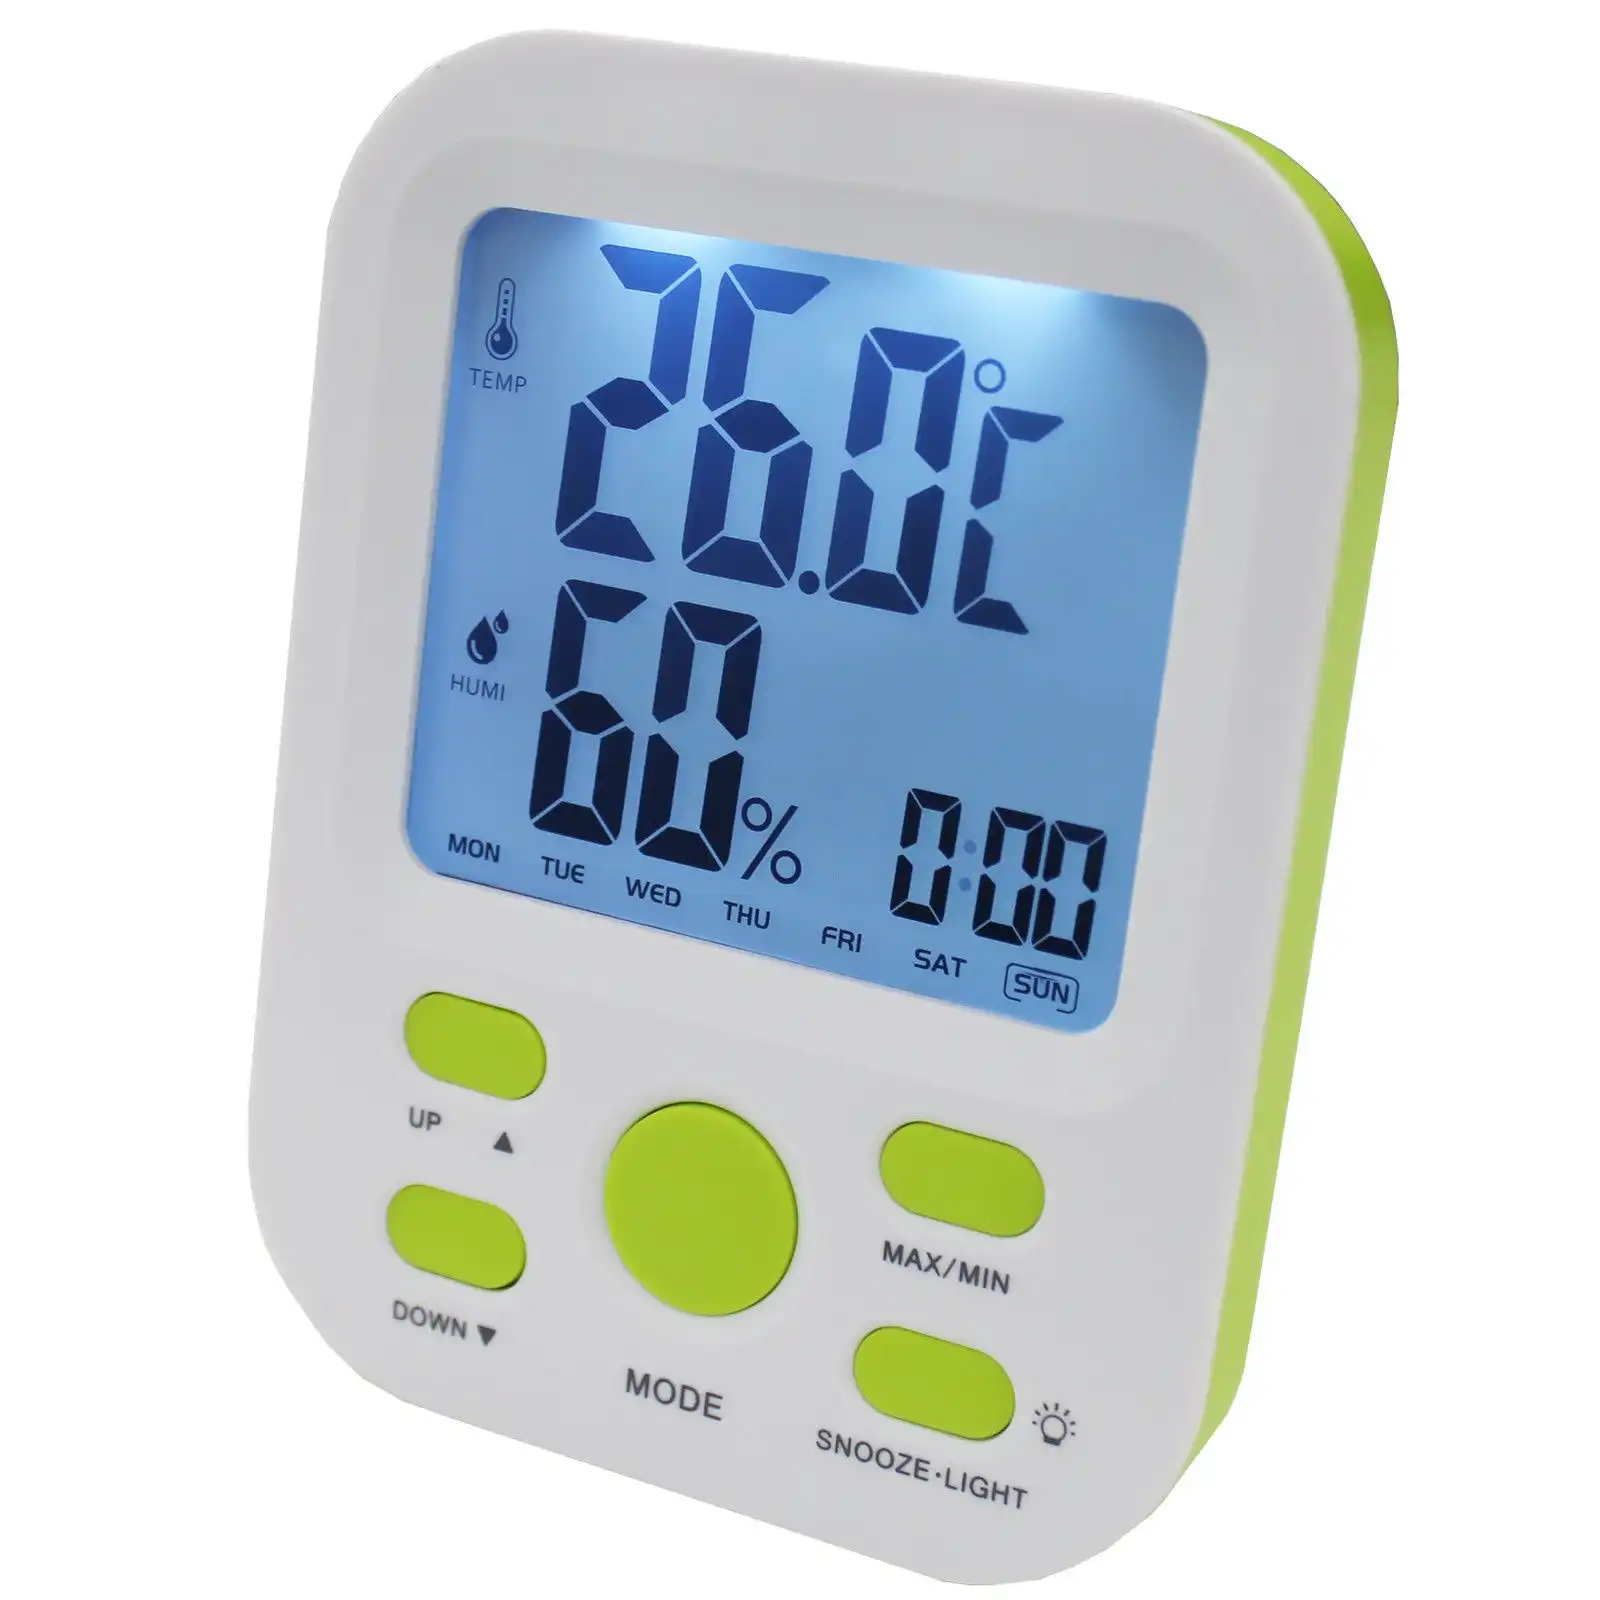 Electronic Digital Thermometer Hygrometer Alarm Clock Lcd Display °C/F %Rh Green